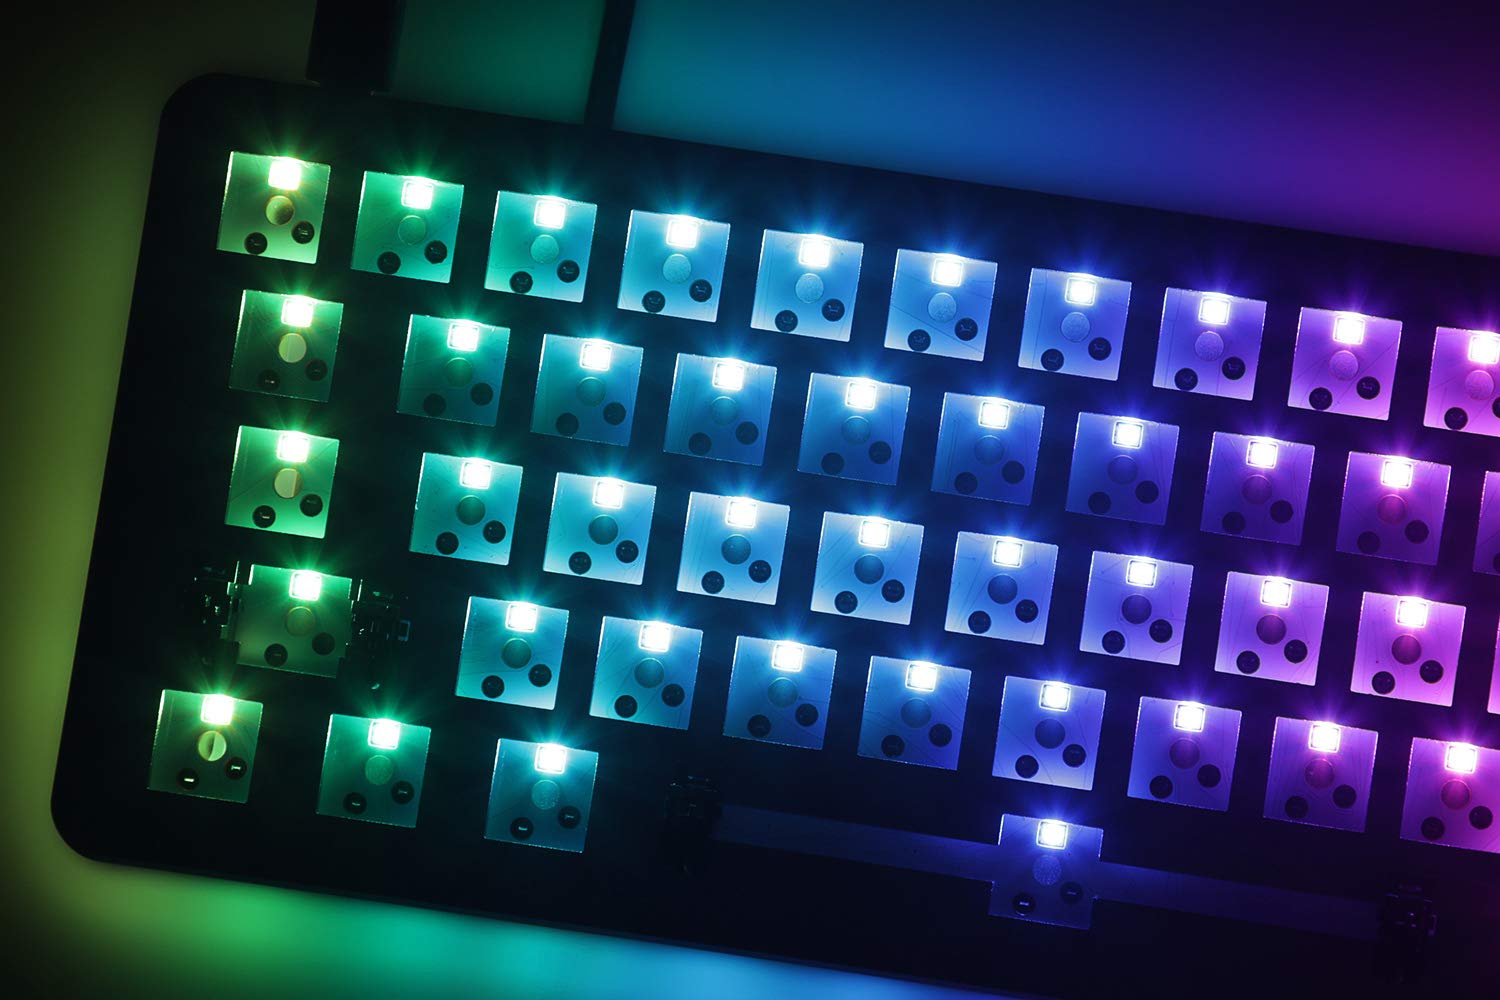 DROP CTRL Mechanical Keyboard — Tenkeyless TKL (87 Key) Gaming Keyboard, Hot-Swap Switches, Programmable Macros, RGB LED Backlighting, USB-C, Doubleshot PBT, Aluminum Frame (Barebones, Black)